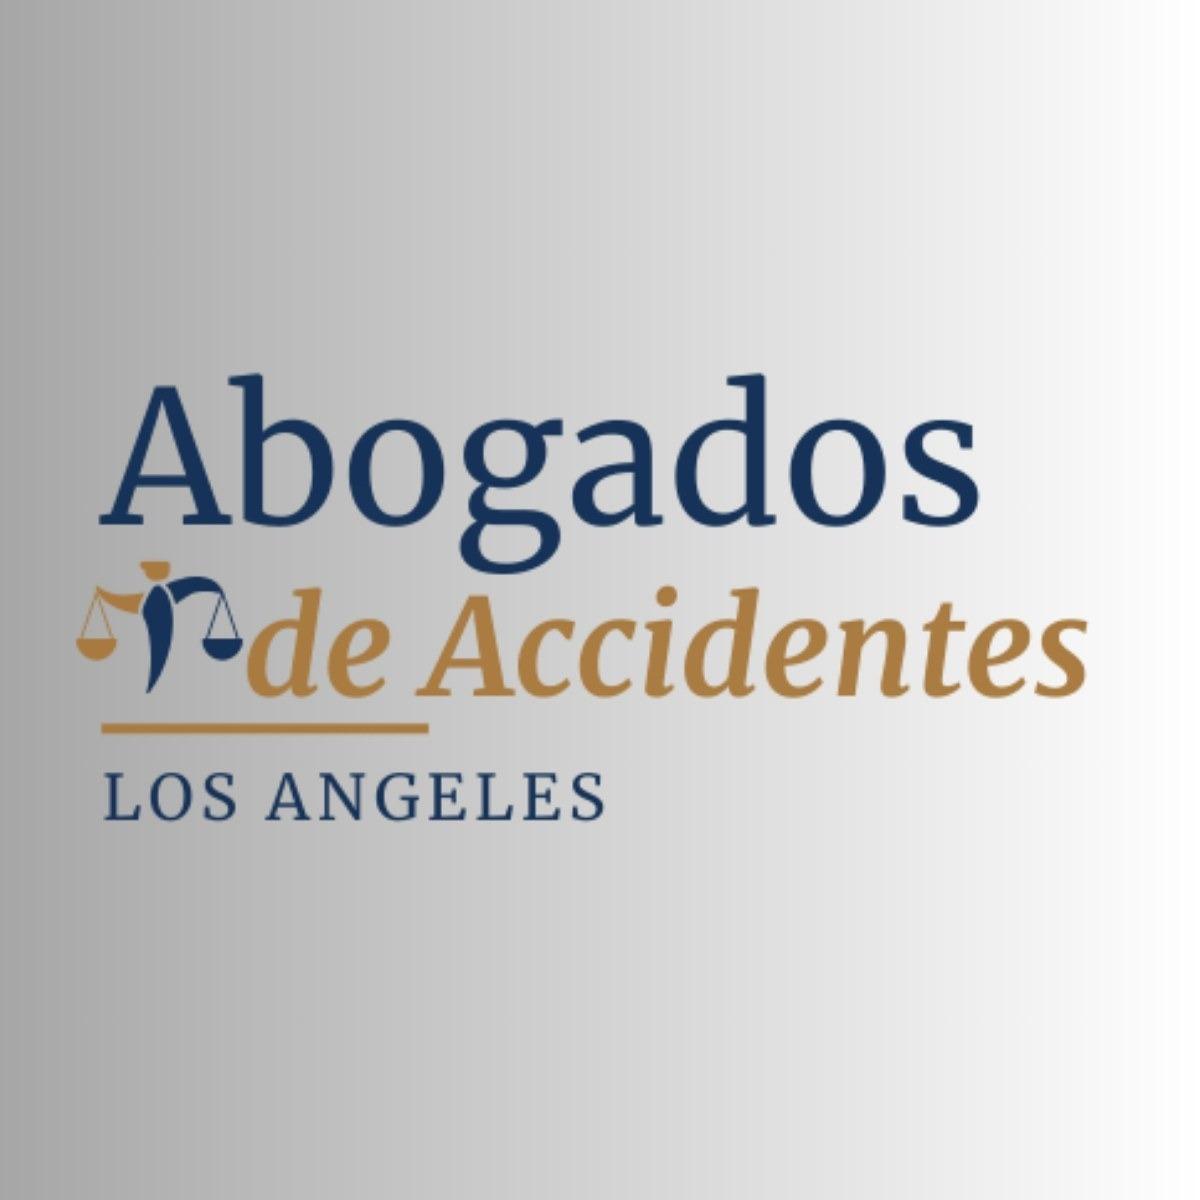 Abogados de Accidentes Los Angeles - Los Angeles, CA 90014 - (213)699-1781 | ShowMeLocal.com